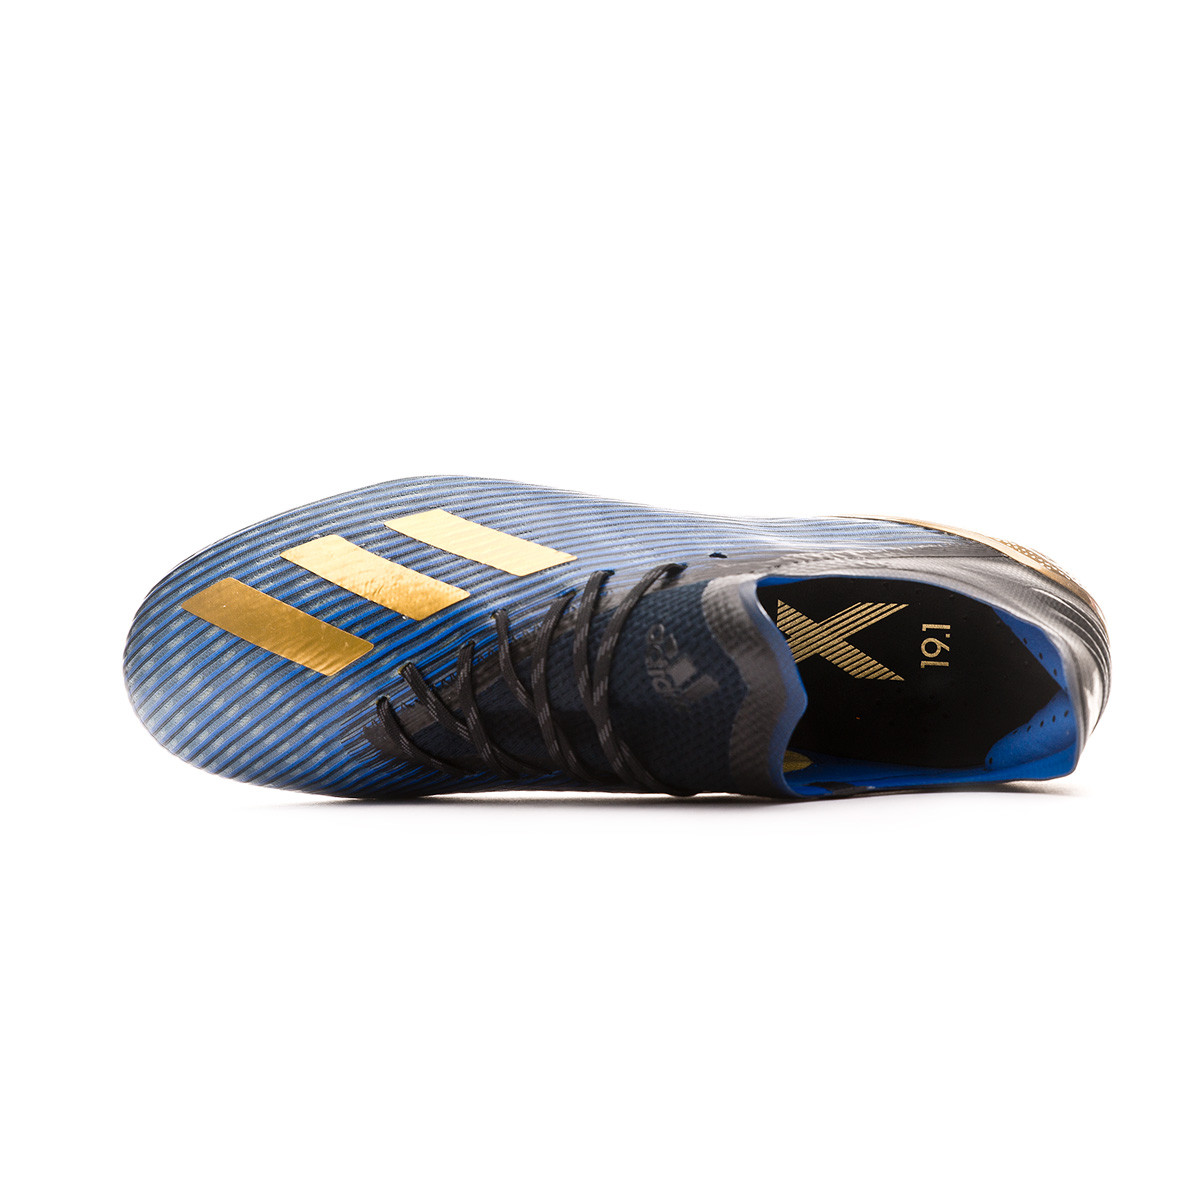 adidas x 19.1 fg core black gold metallic blue